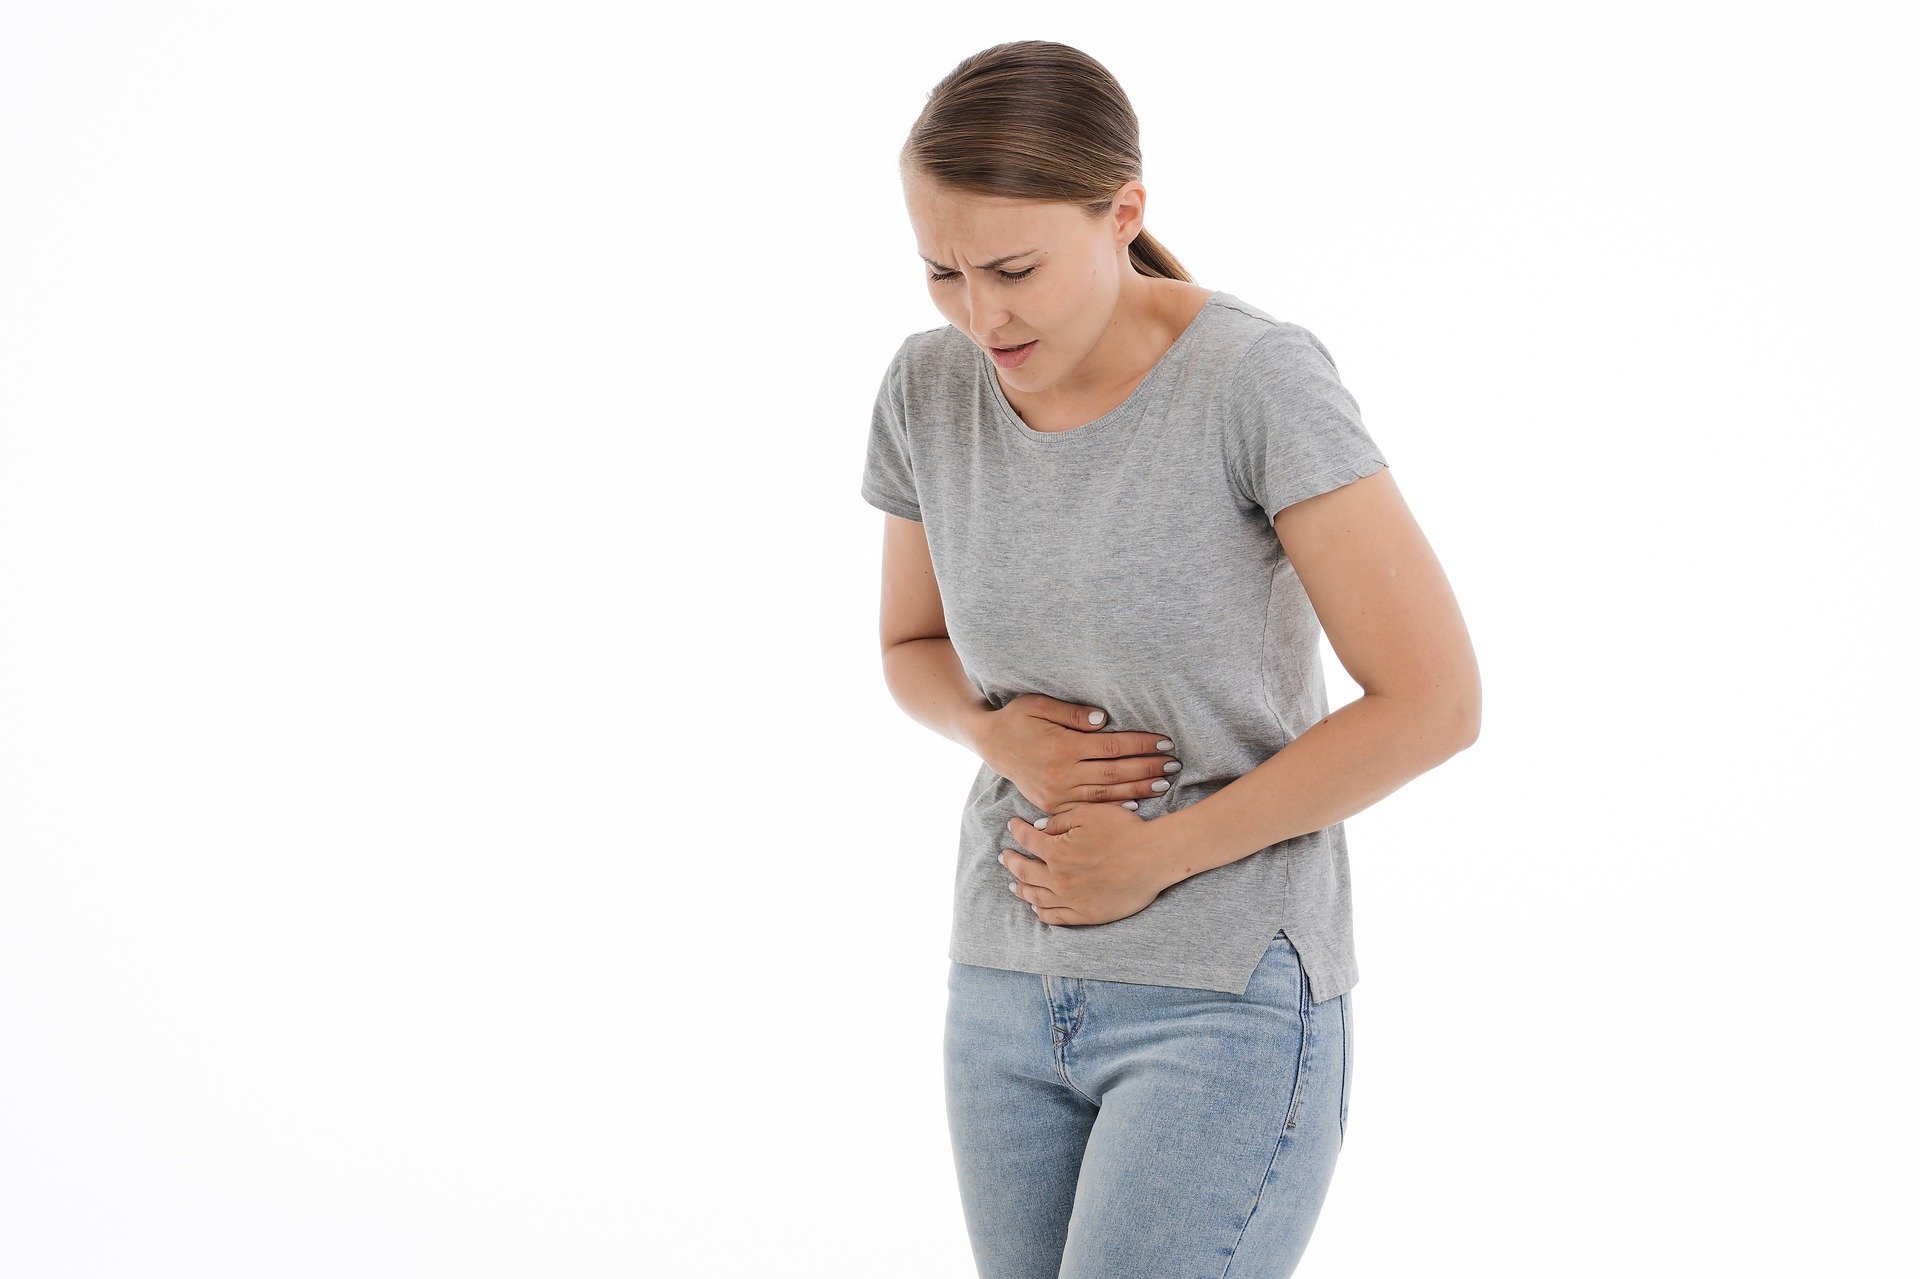 Do I have Endometriosis or Irritable Bowel Syndrome (IBS)?